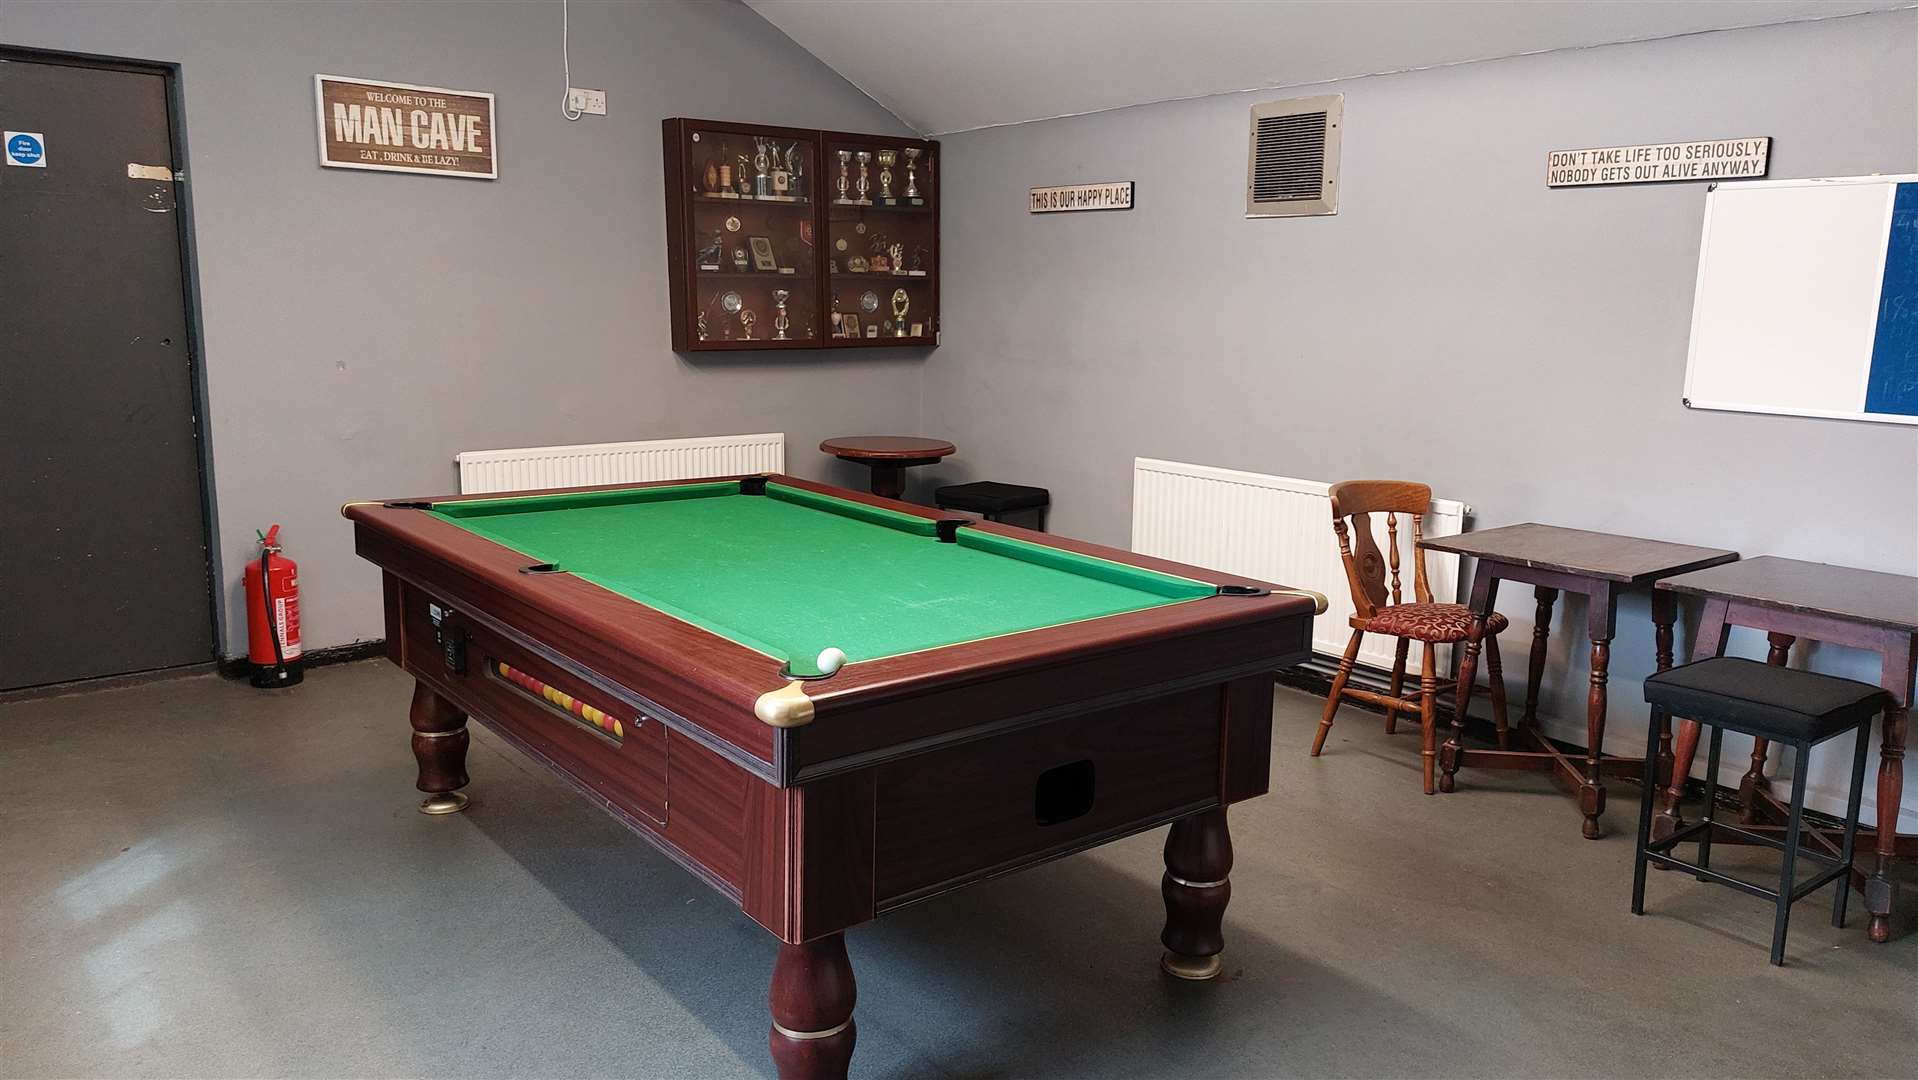 The pool room at the William Harvey Inn in Willesborough, Ashford